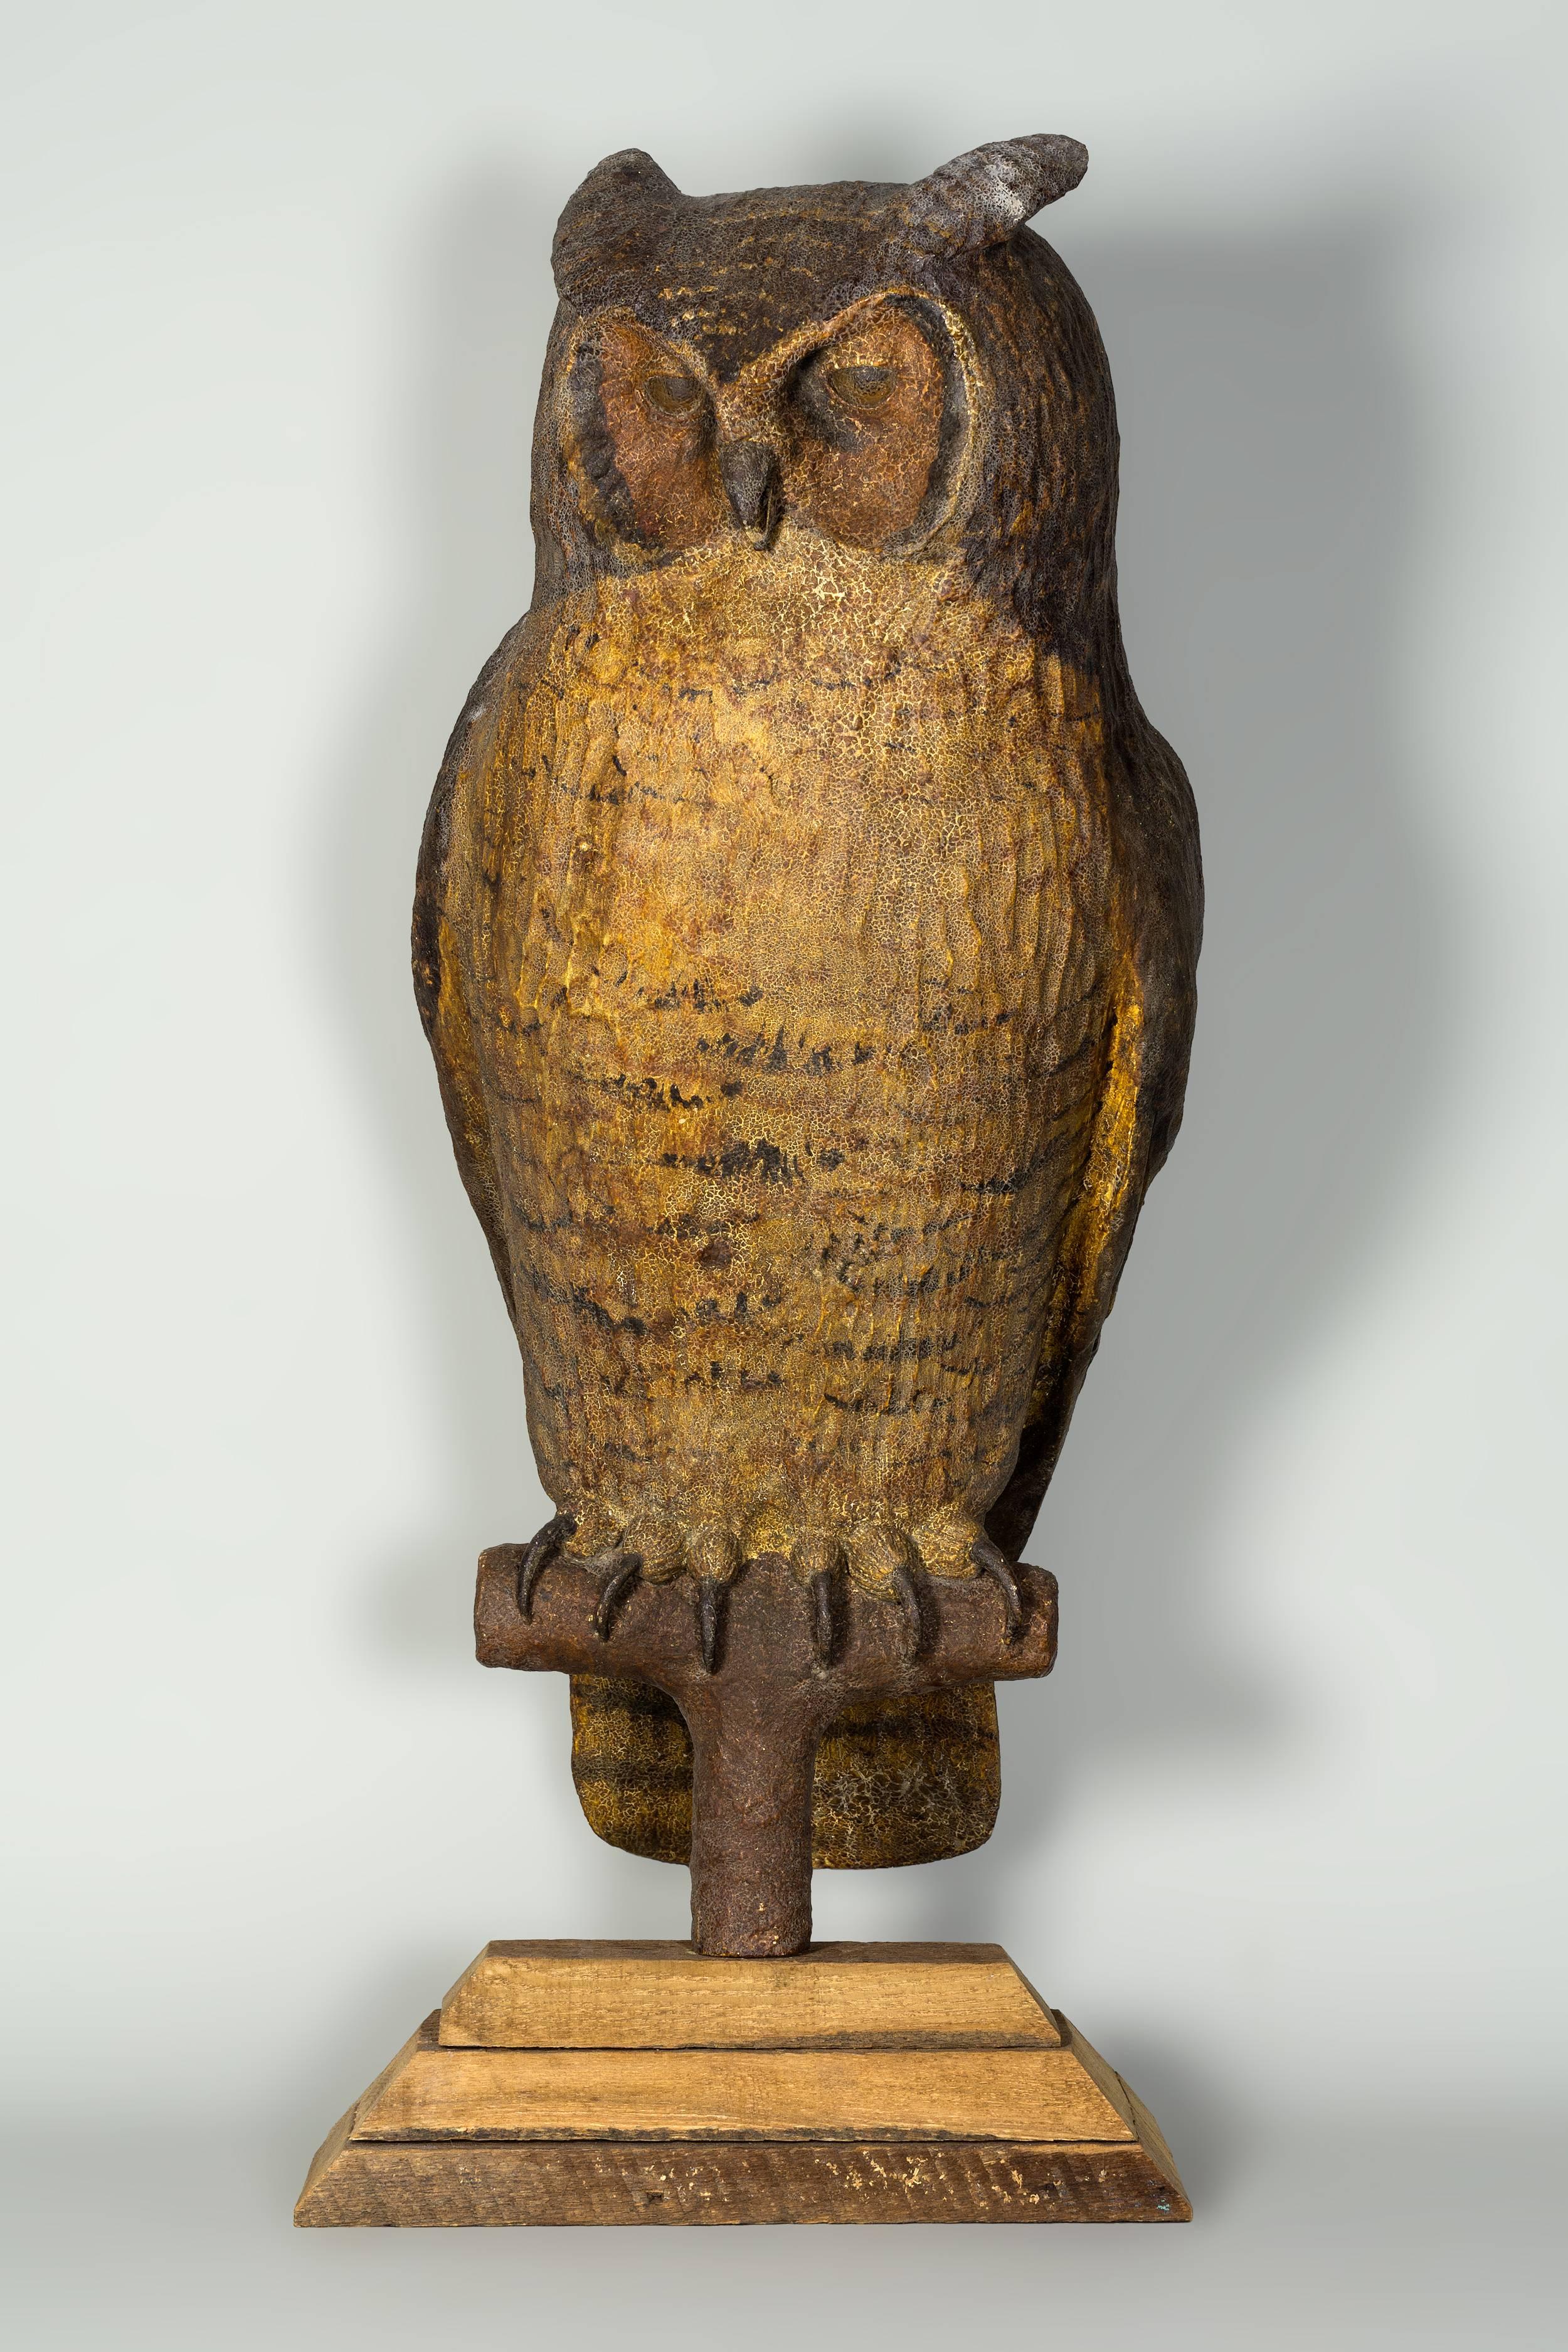 American Great Horned Owl by Frank Finney